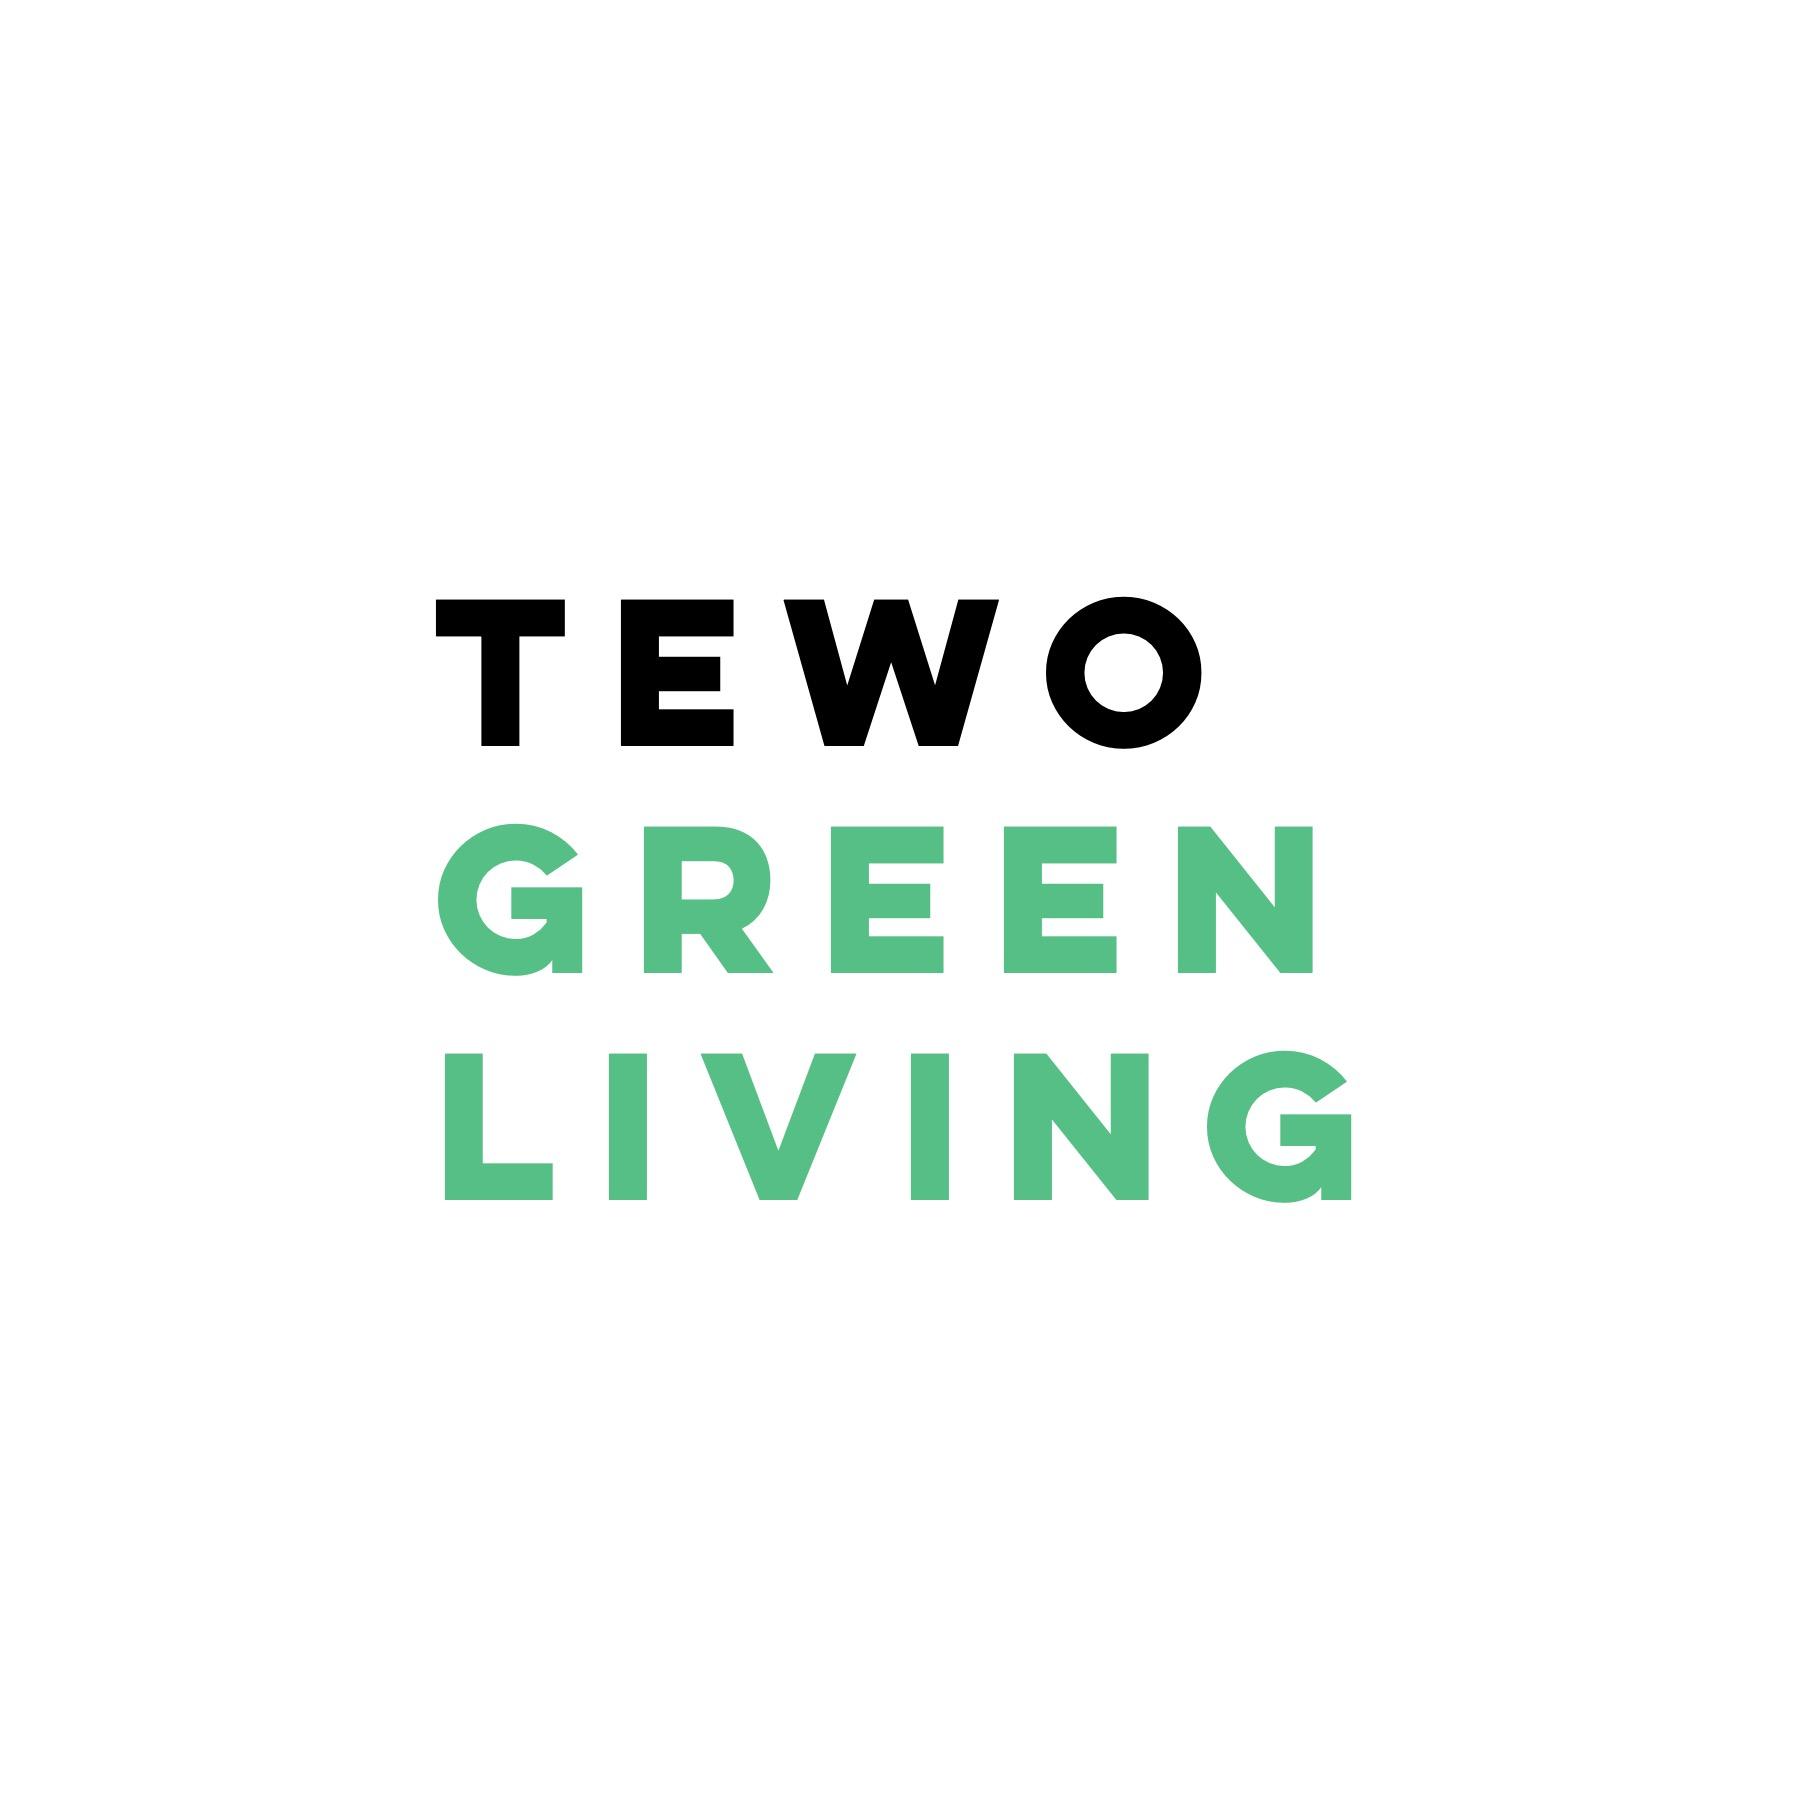 Tewo Green Living